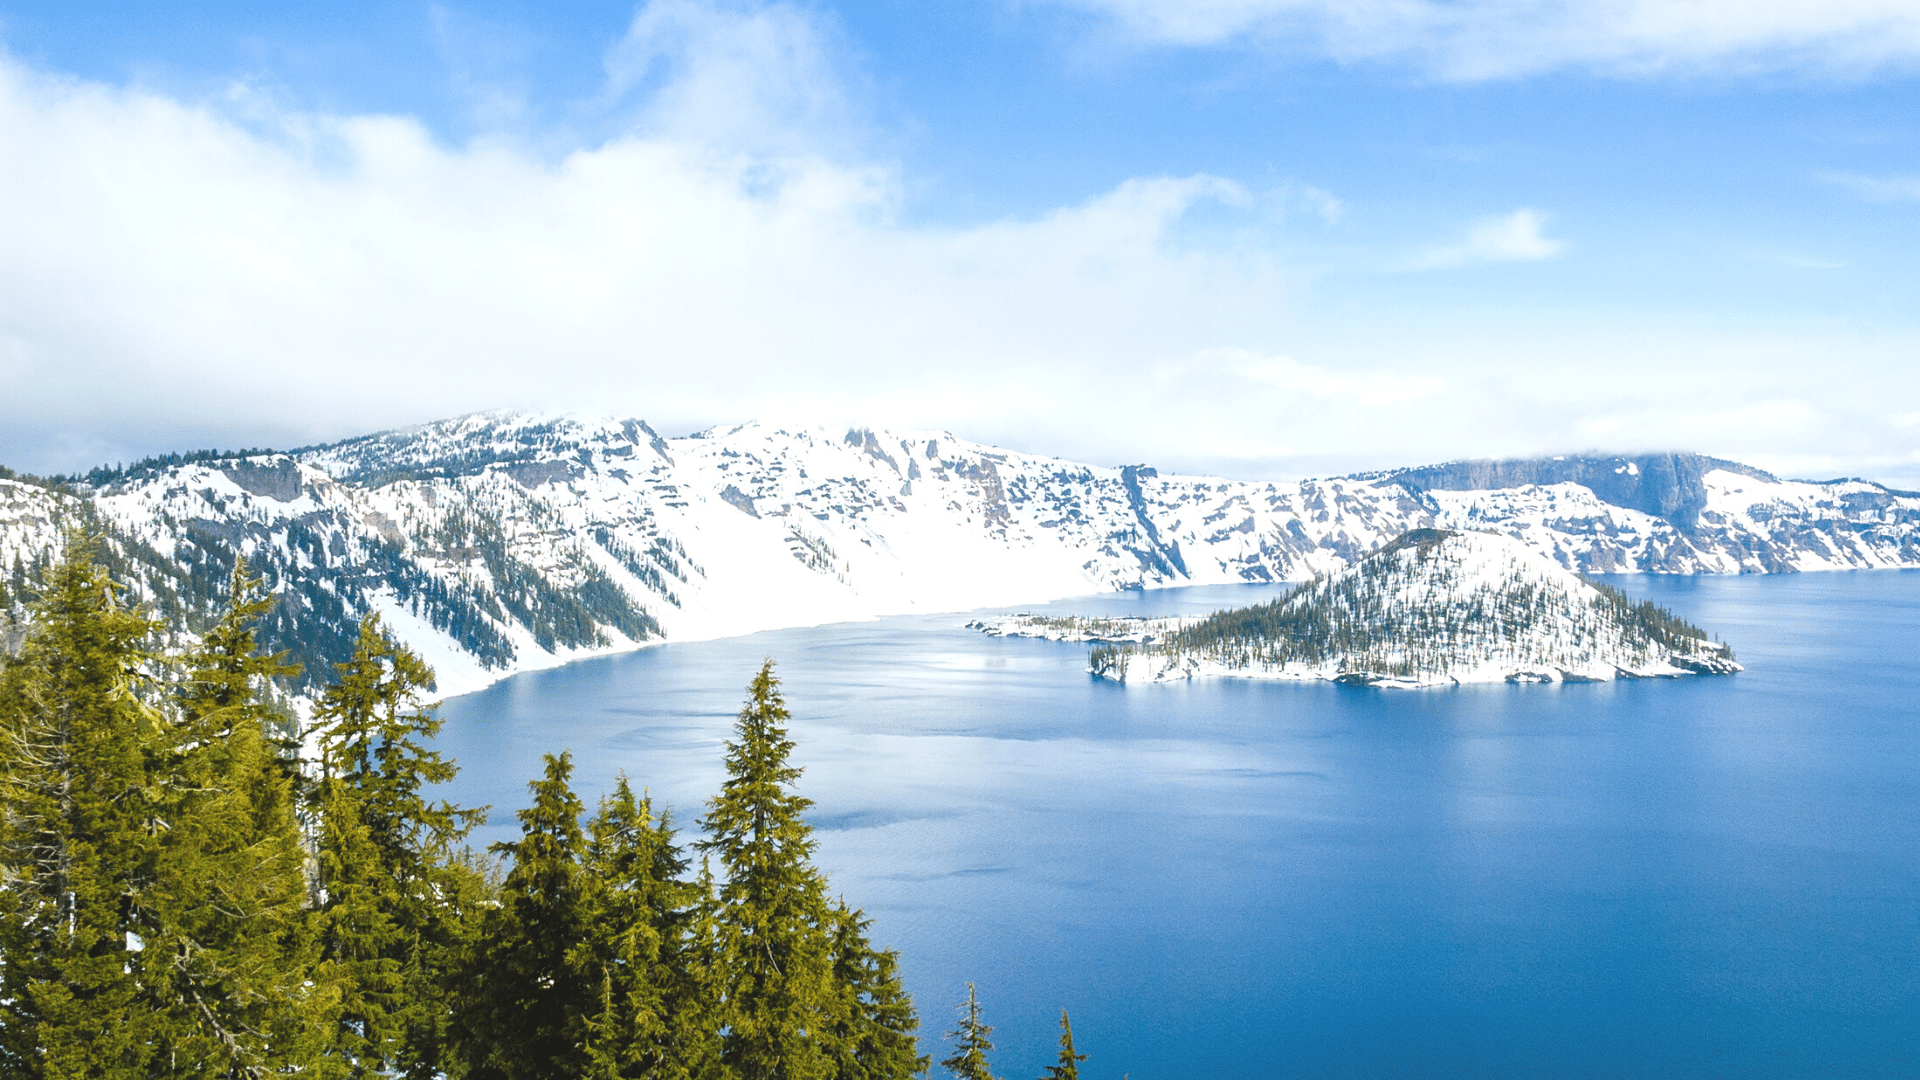 National Parks and the Oregon Coast